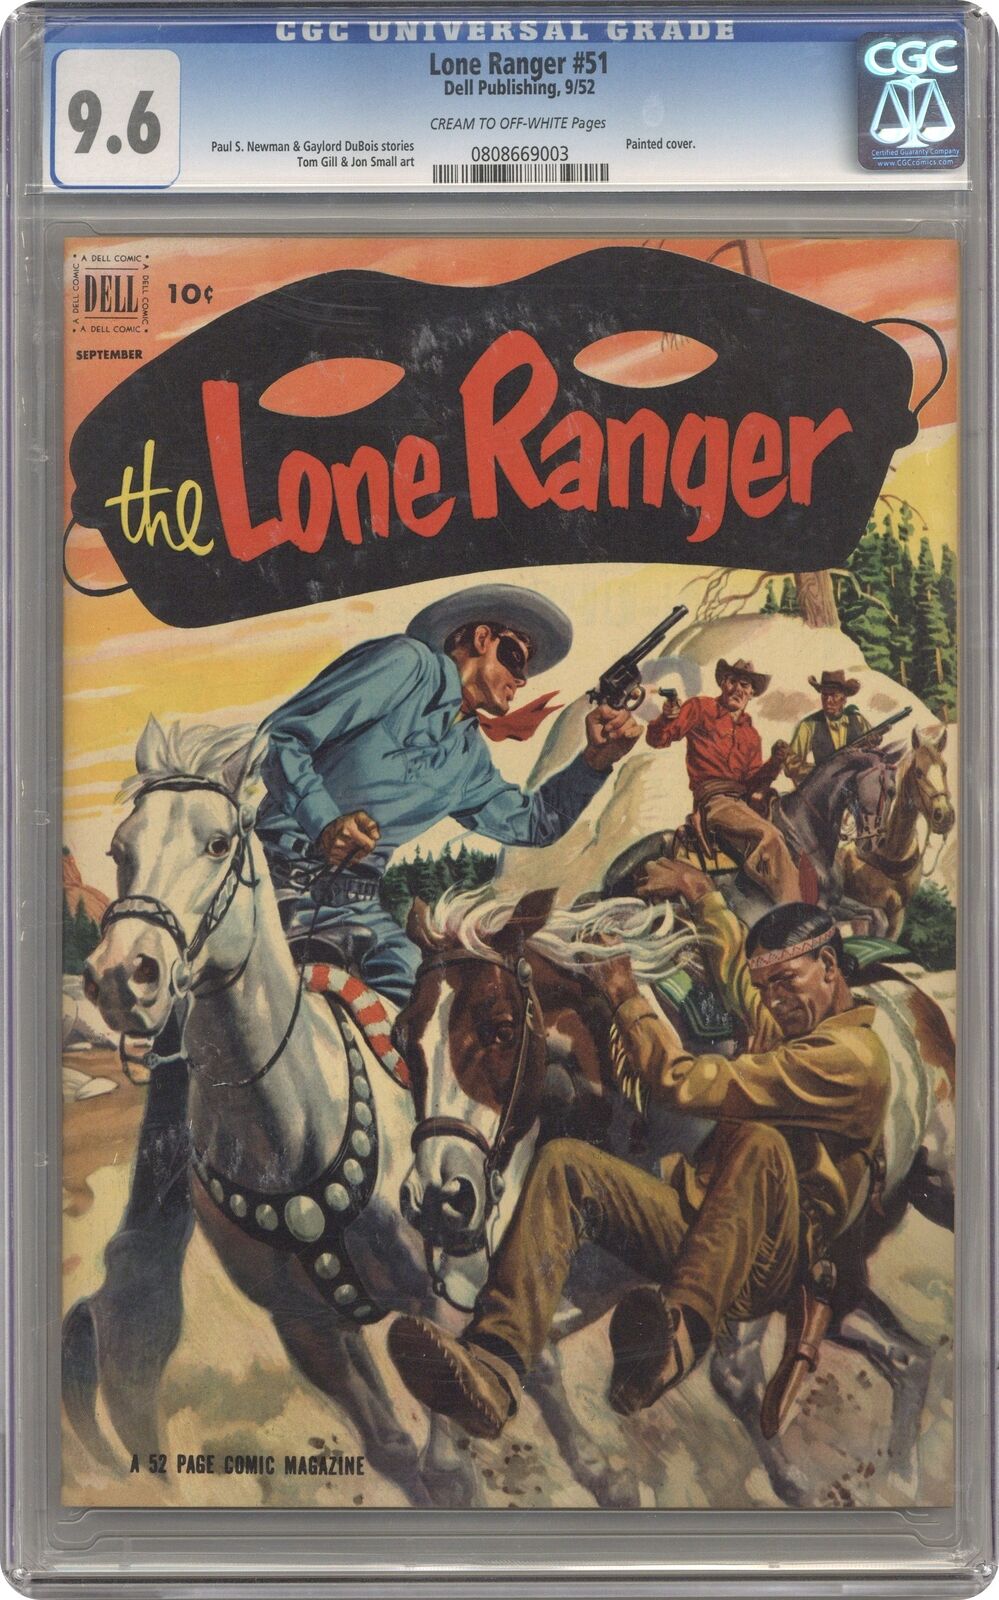 Lone Ranger #51 CGC 9.6 1952 0808669003